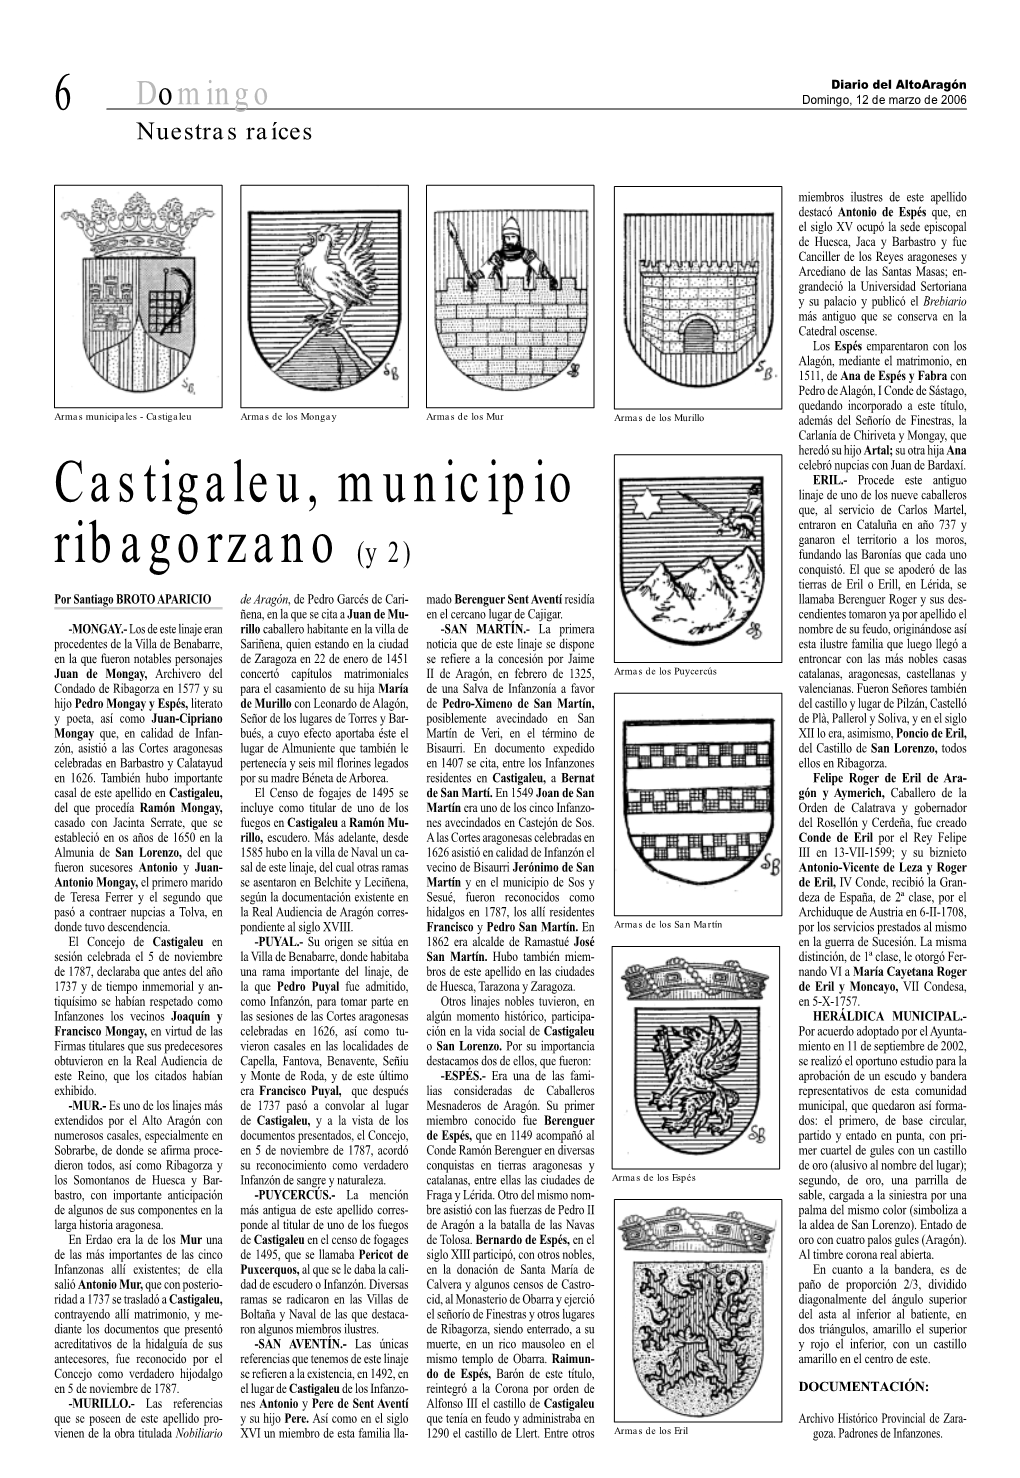 Castigaleu, Municipio Ribagorzano